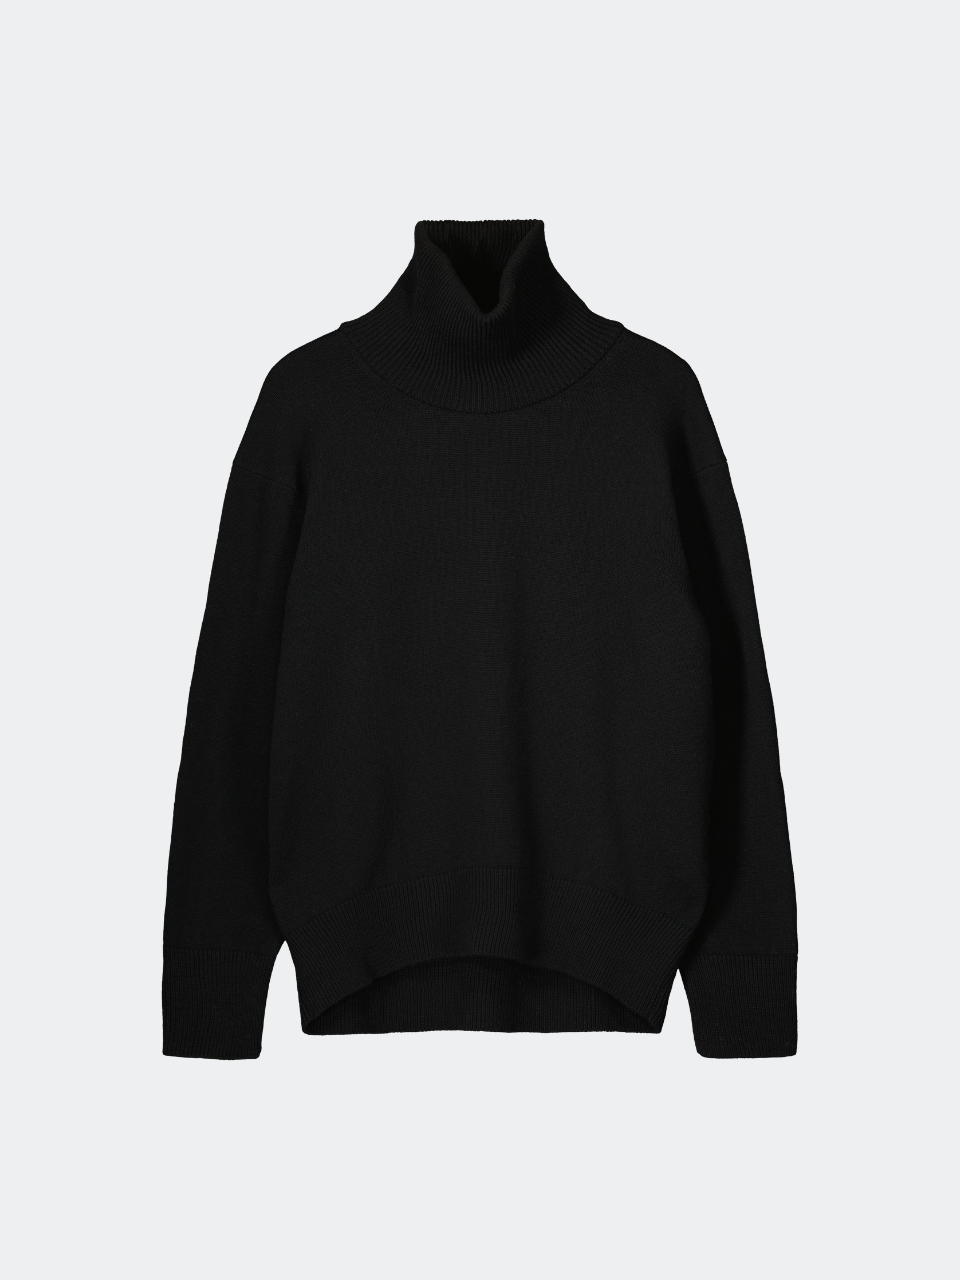 Almada Label - Alma Turtleneck Sweater